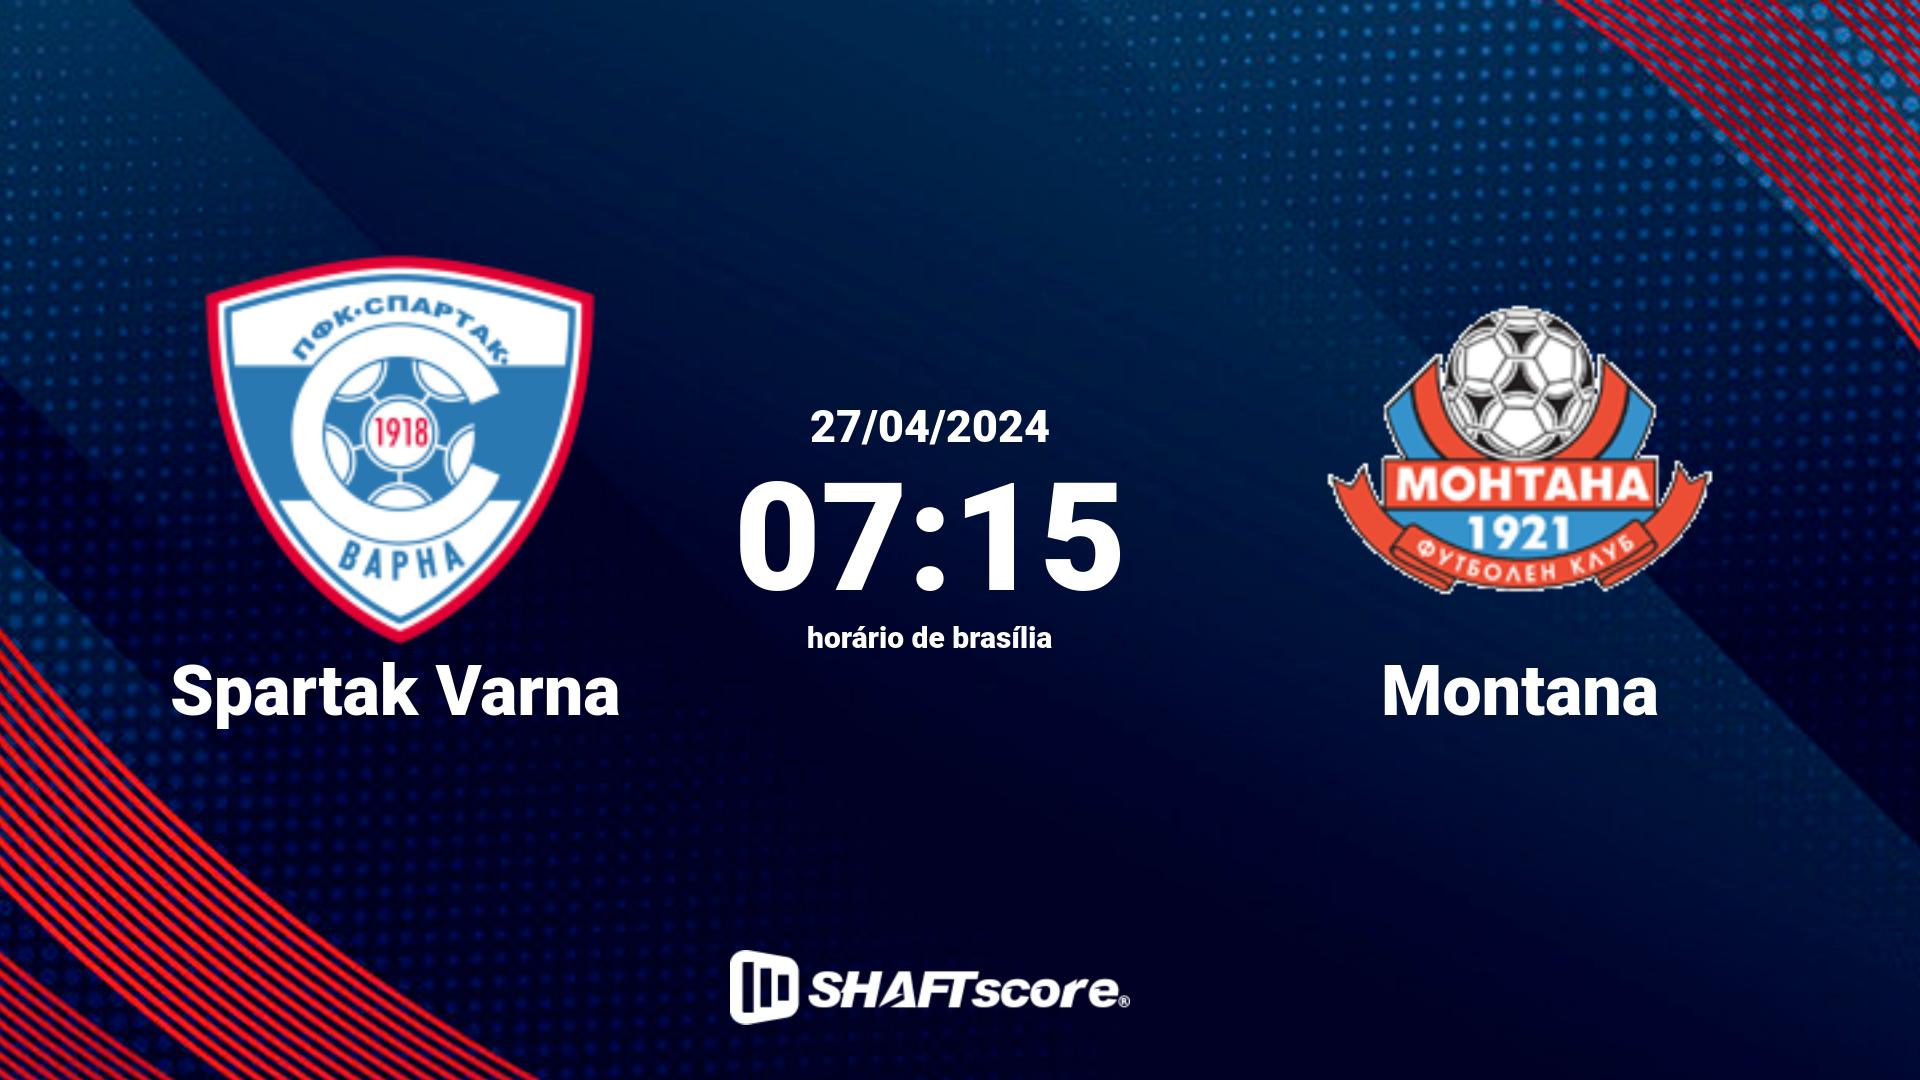 Estatísticas do jogo Spartak Varna vs Montana 27.04 07:15